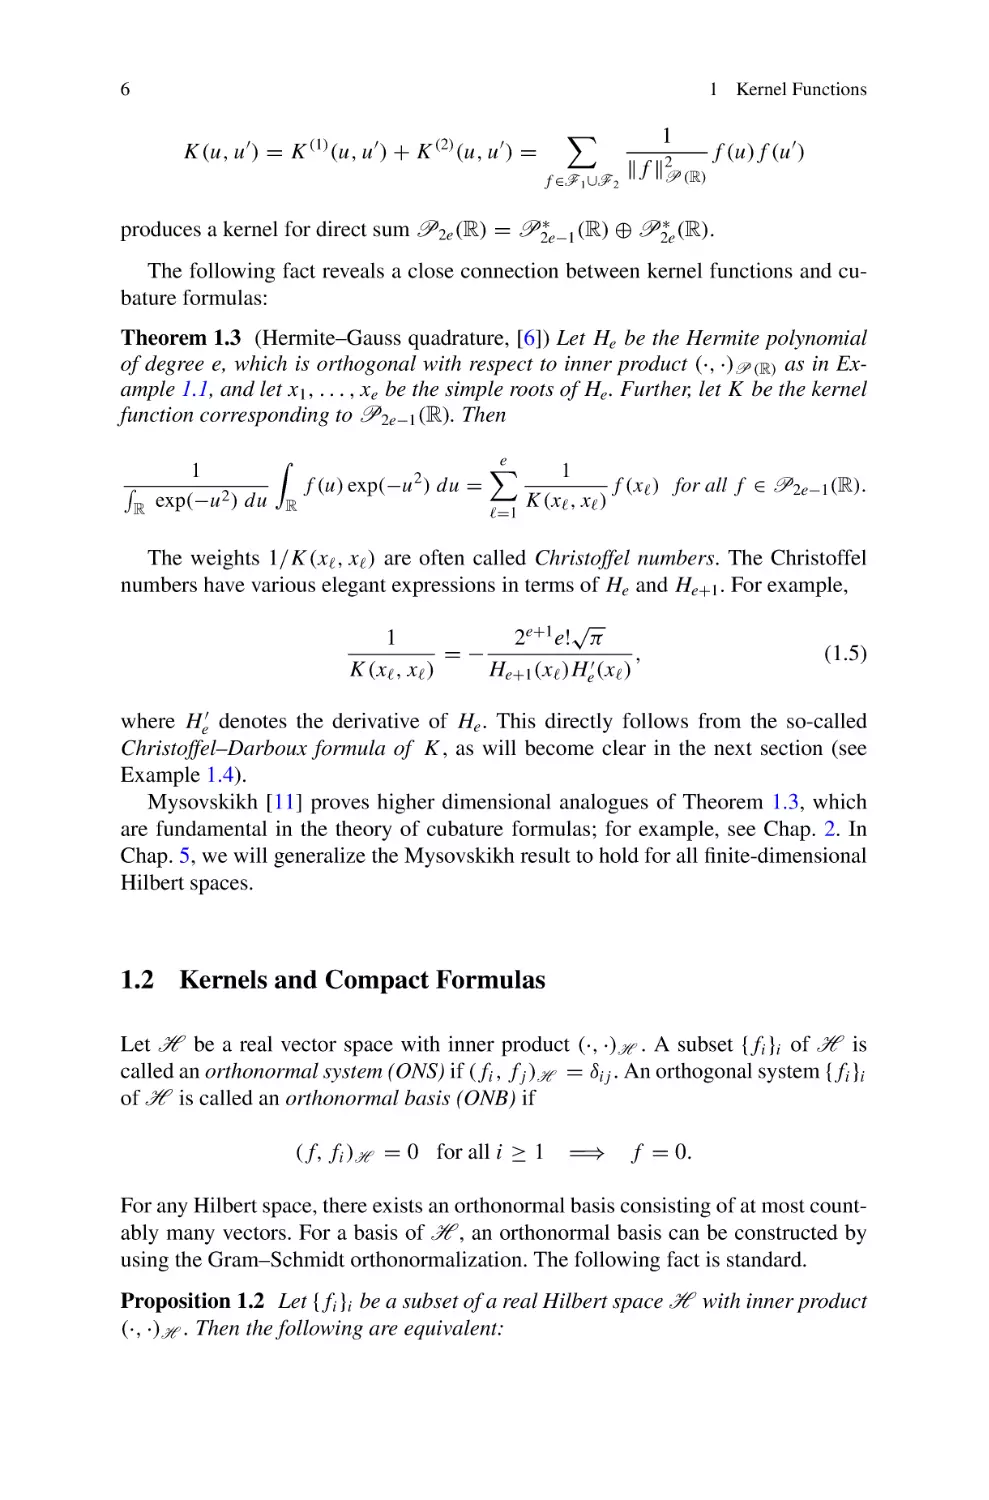 1.2 Kernels and Compact Formulas